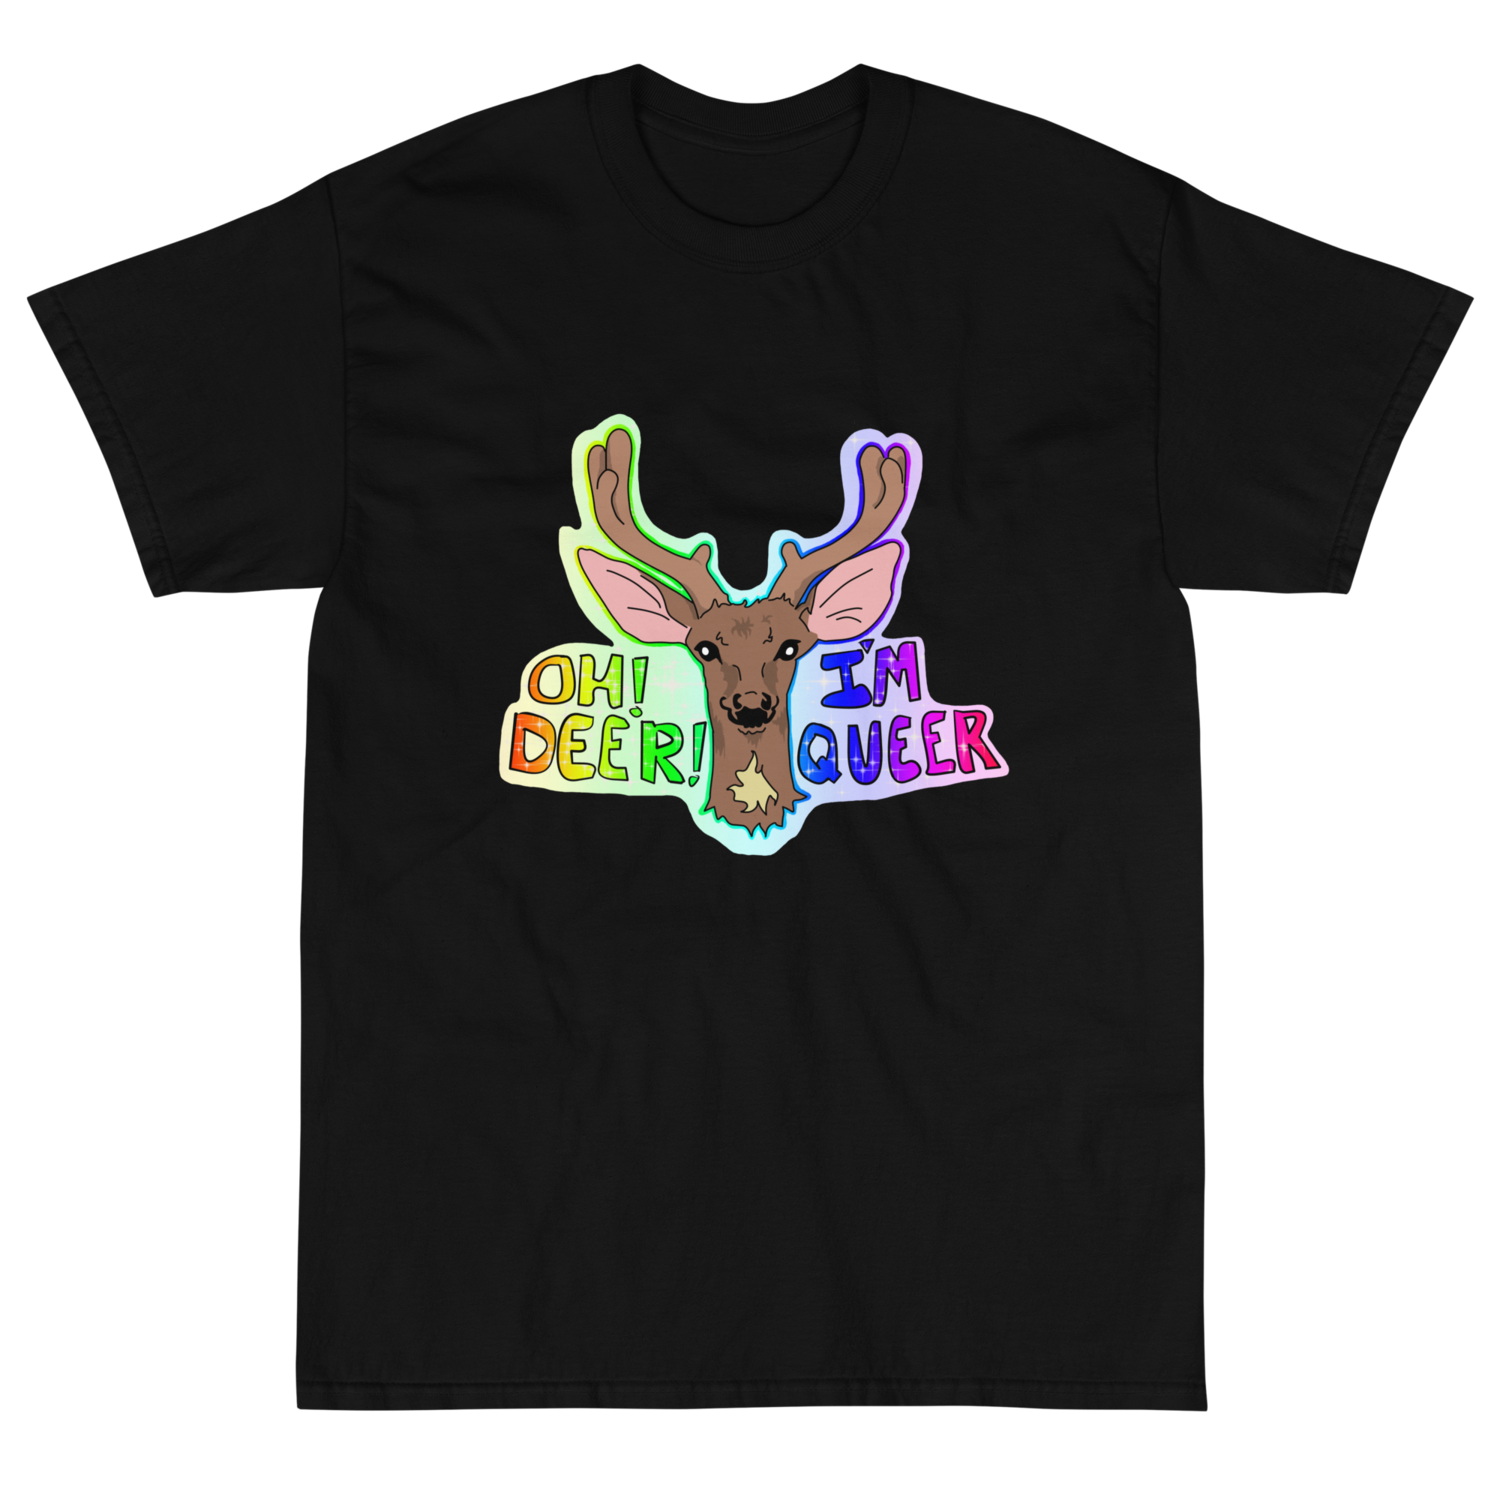 Oh Deer! I'm Queer. T-Shirt